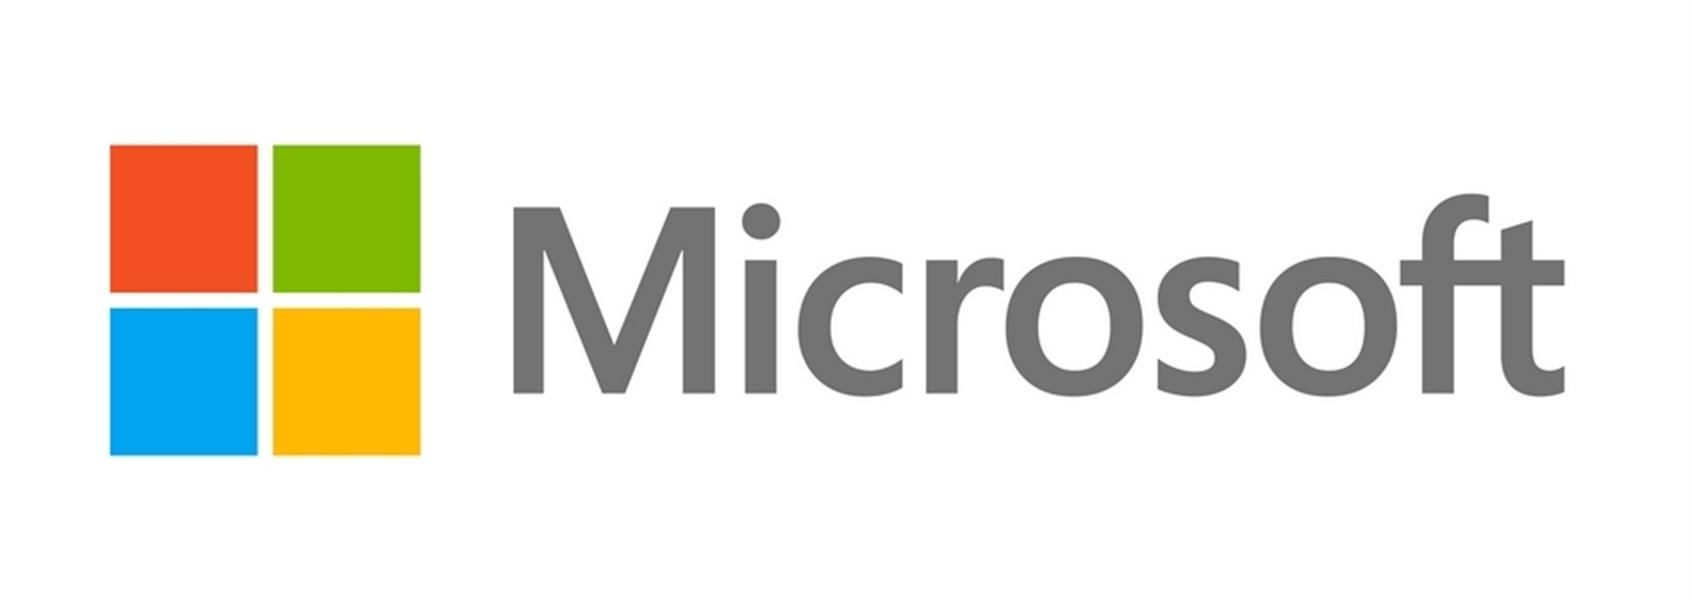 Microsoft 031c9e47-4802-4248-838e-778fb1d2cc05 1 licentie(s) Licentie 1 maand(en)